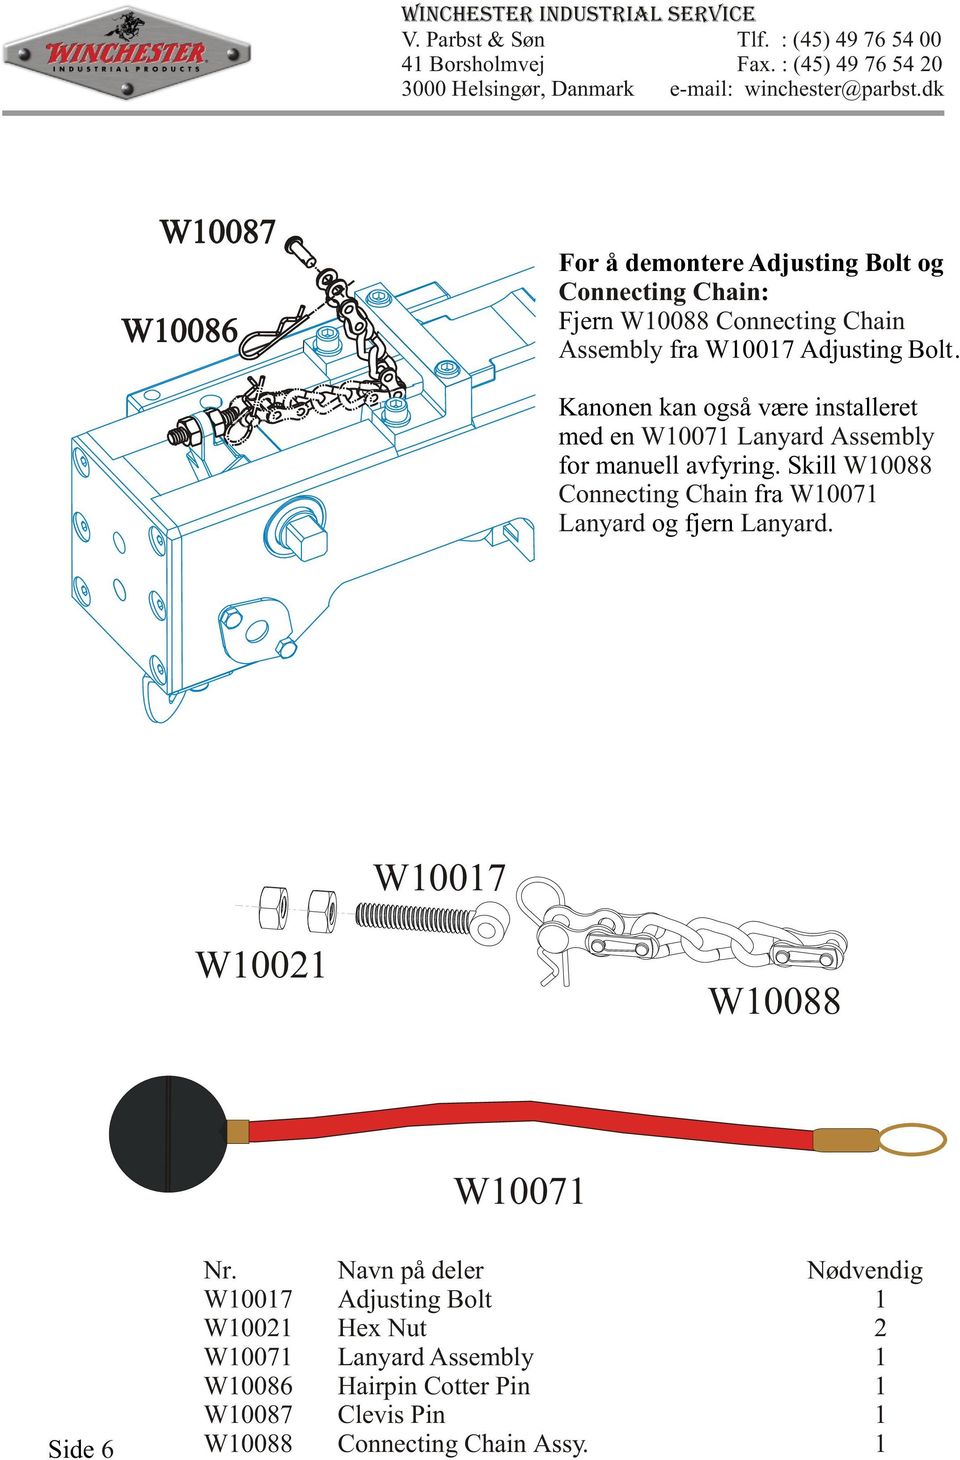 Skill W10088 Connecting Chain fra W10071 Lanyard og fjern Lanyard.